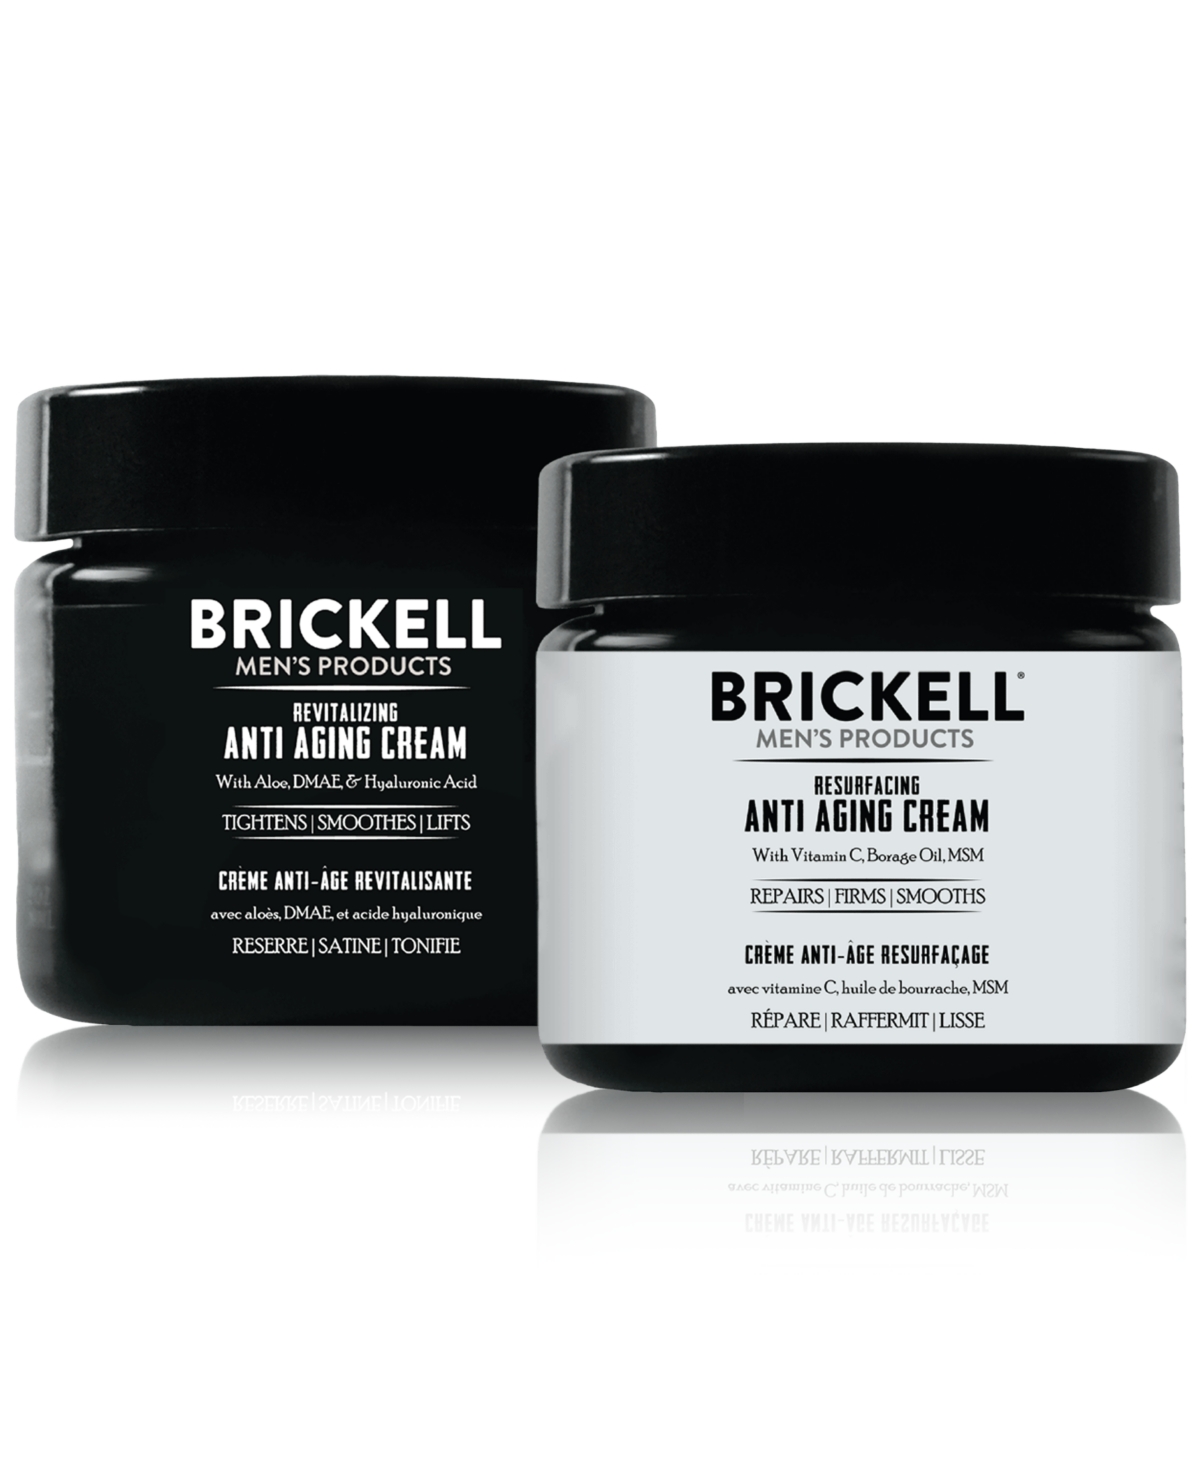 Brickell Men's Products 2-Pc. Day & Night Cream Set